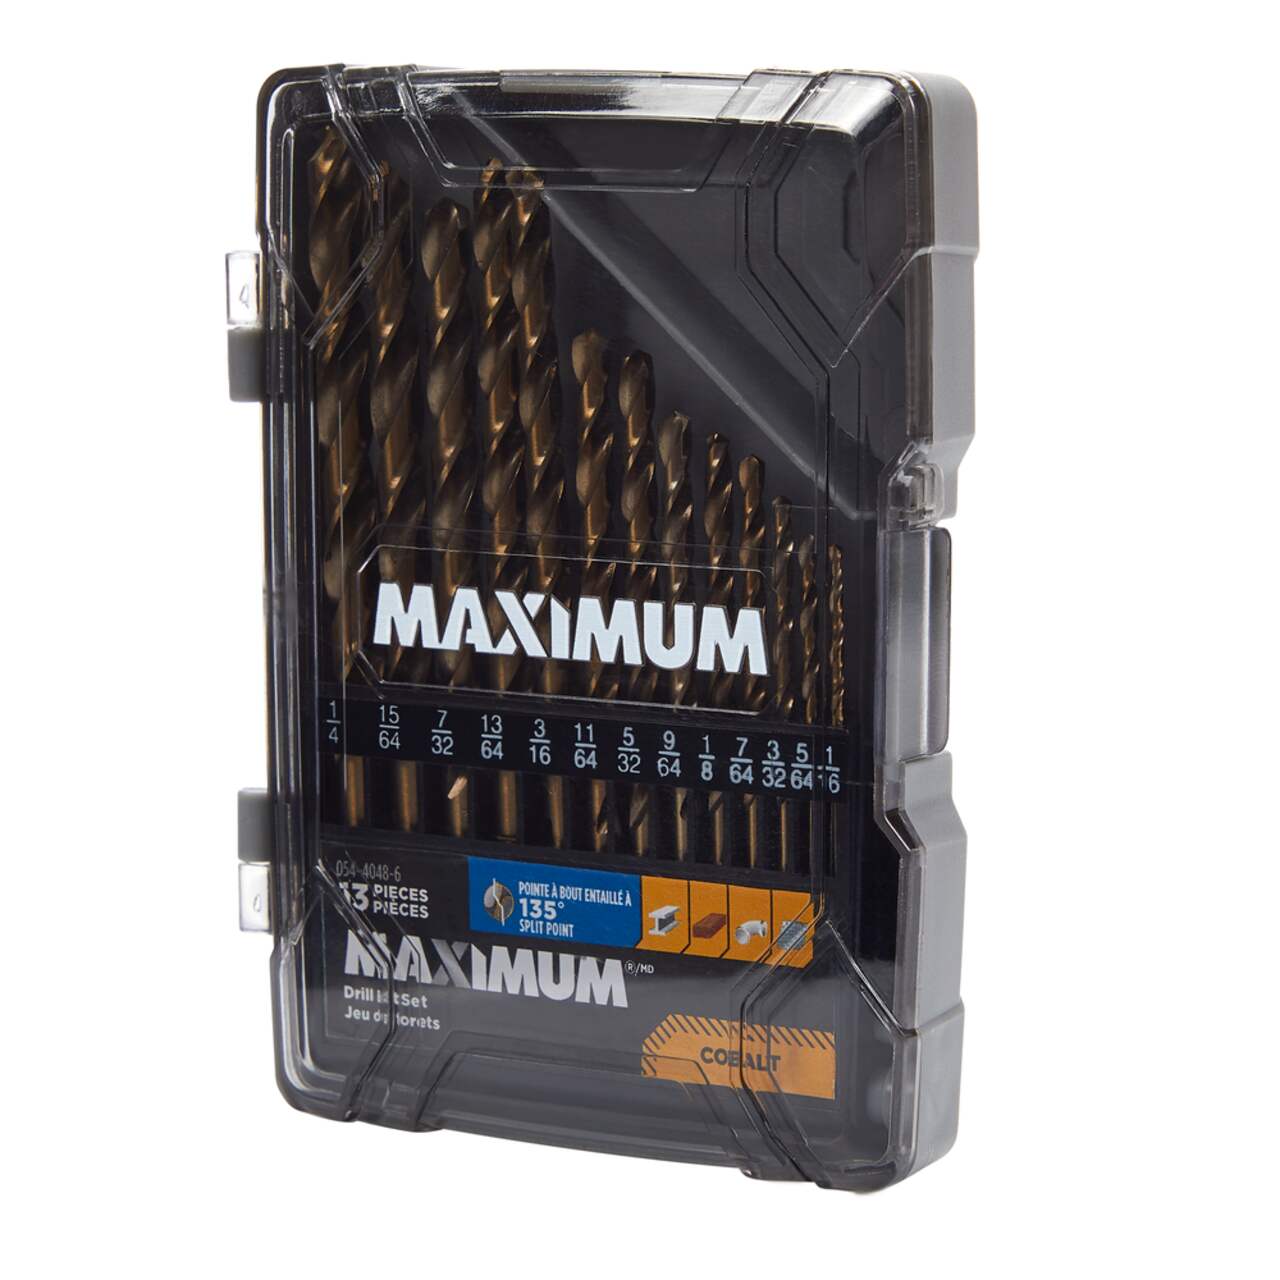 MAXIMUM Cobalt Drill Bit Set for Wood, Metal, Plastic, 13-pc